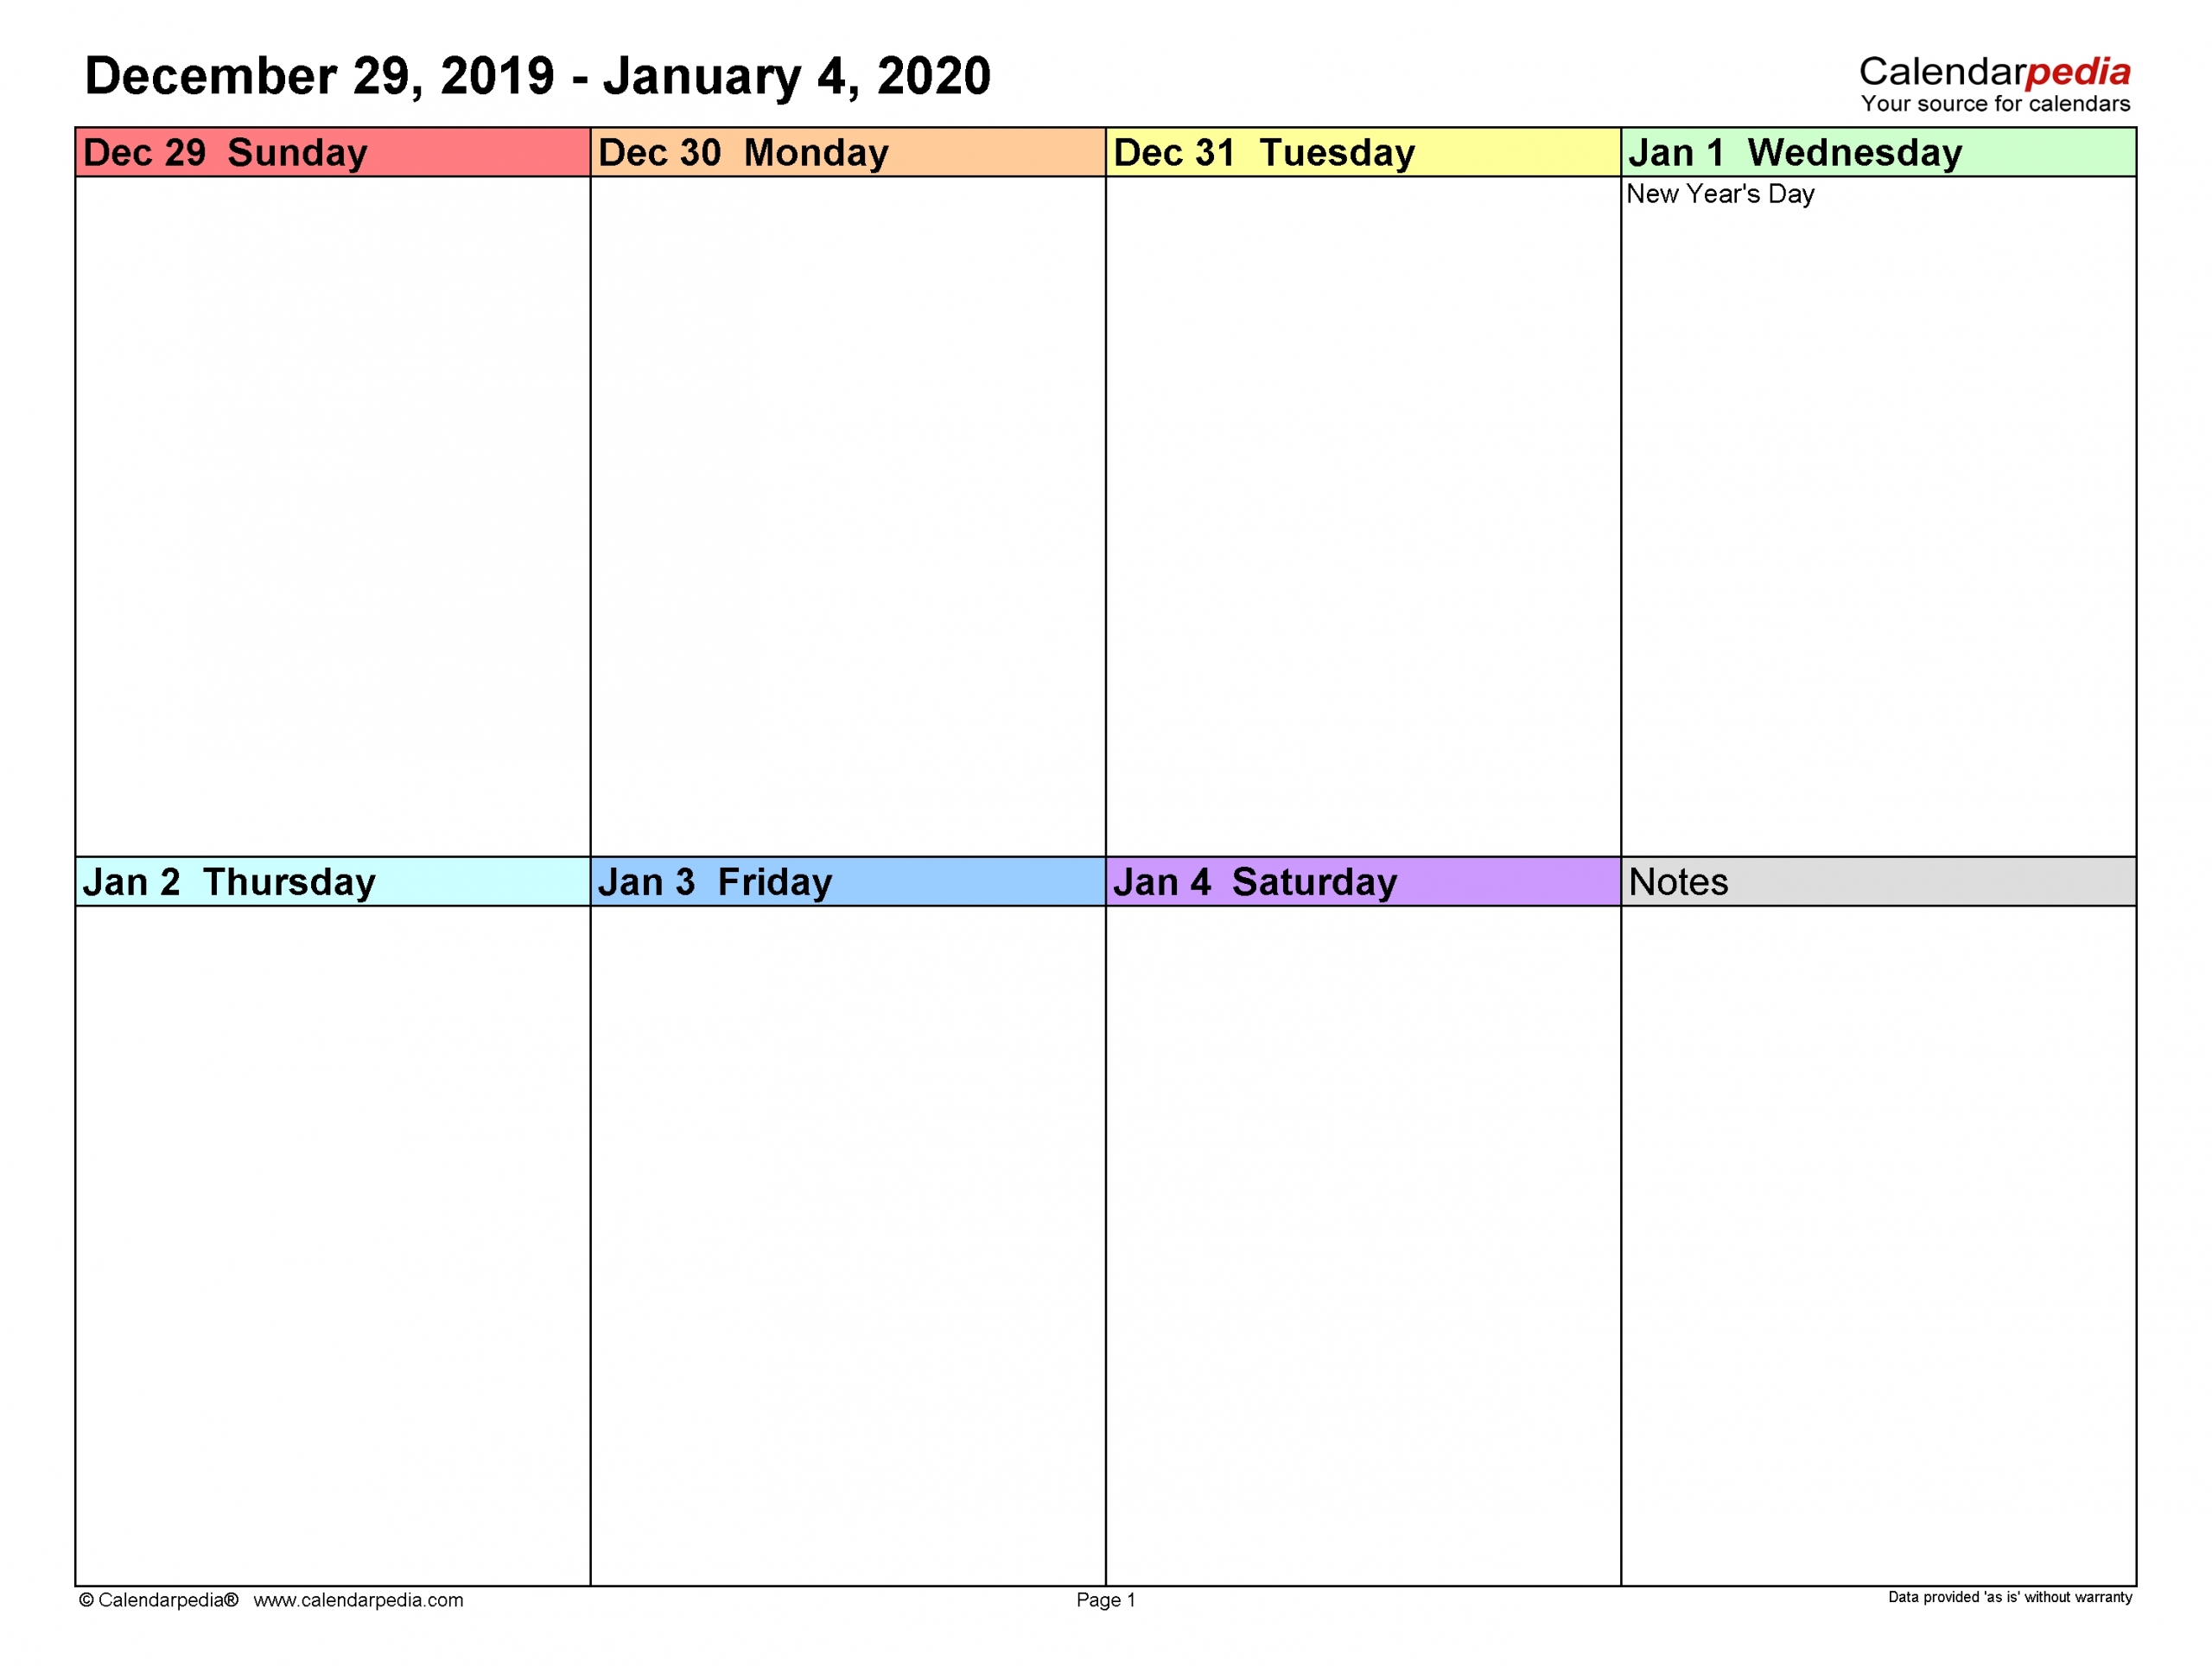 Weekly Calendars 2020 For Pdf - 12 Free Printable Templates within Calendar 2020 Week Wise In Window